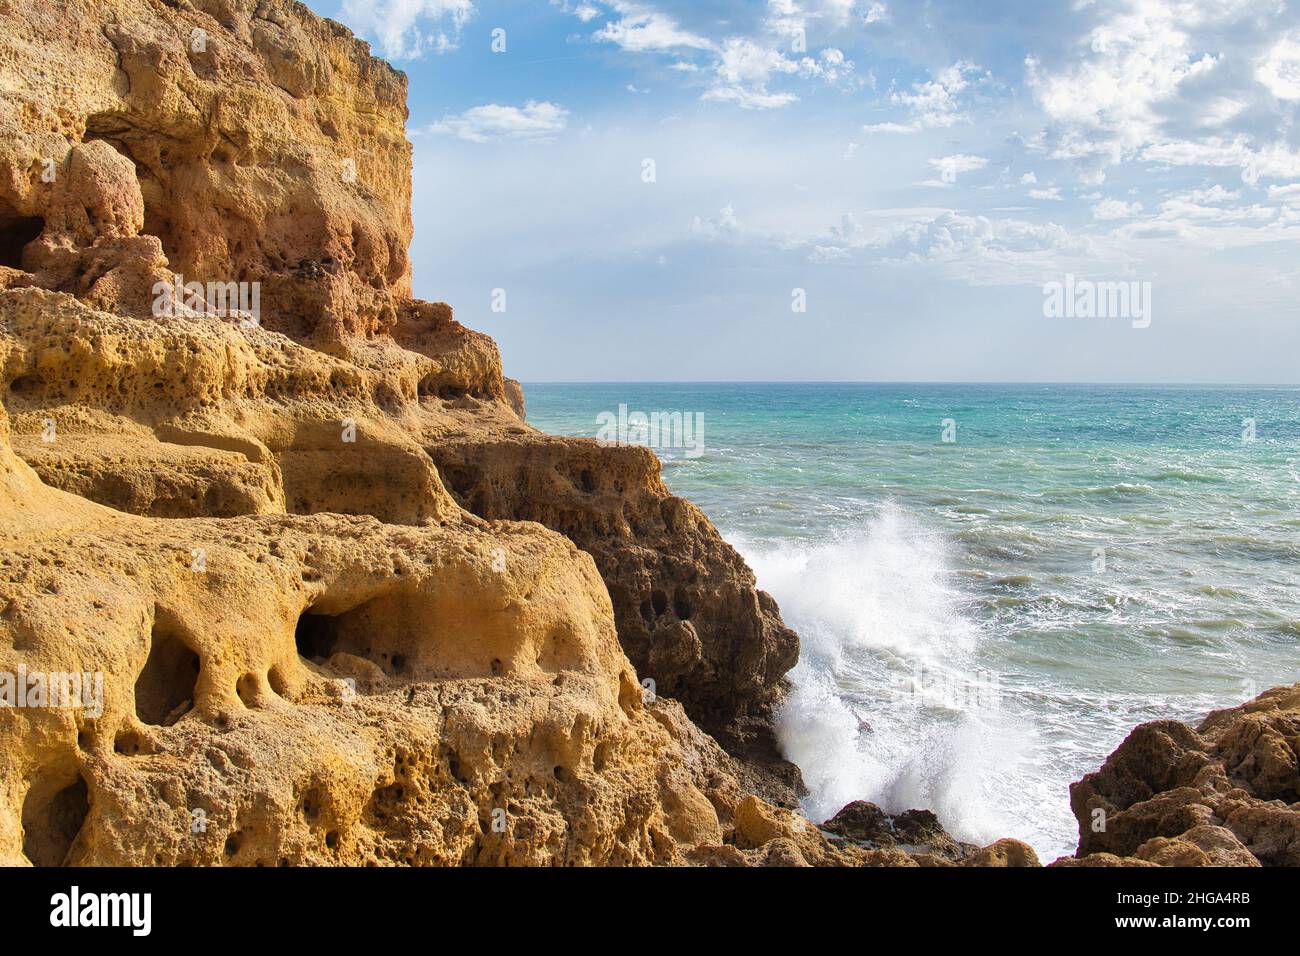 Waves pounding the limestone cliffs at Algar Seco, Carvoeiro, Algarve, Portugal Stock Photo